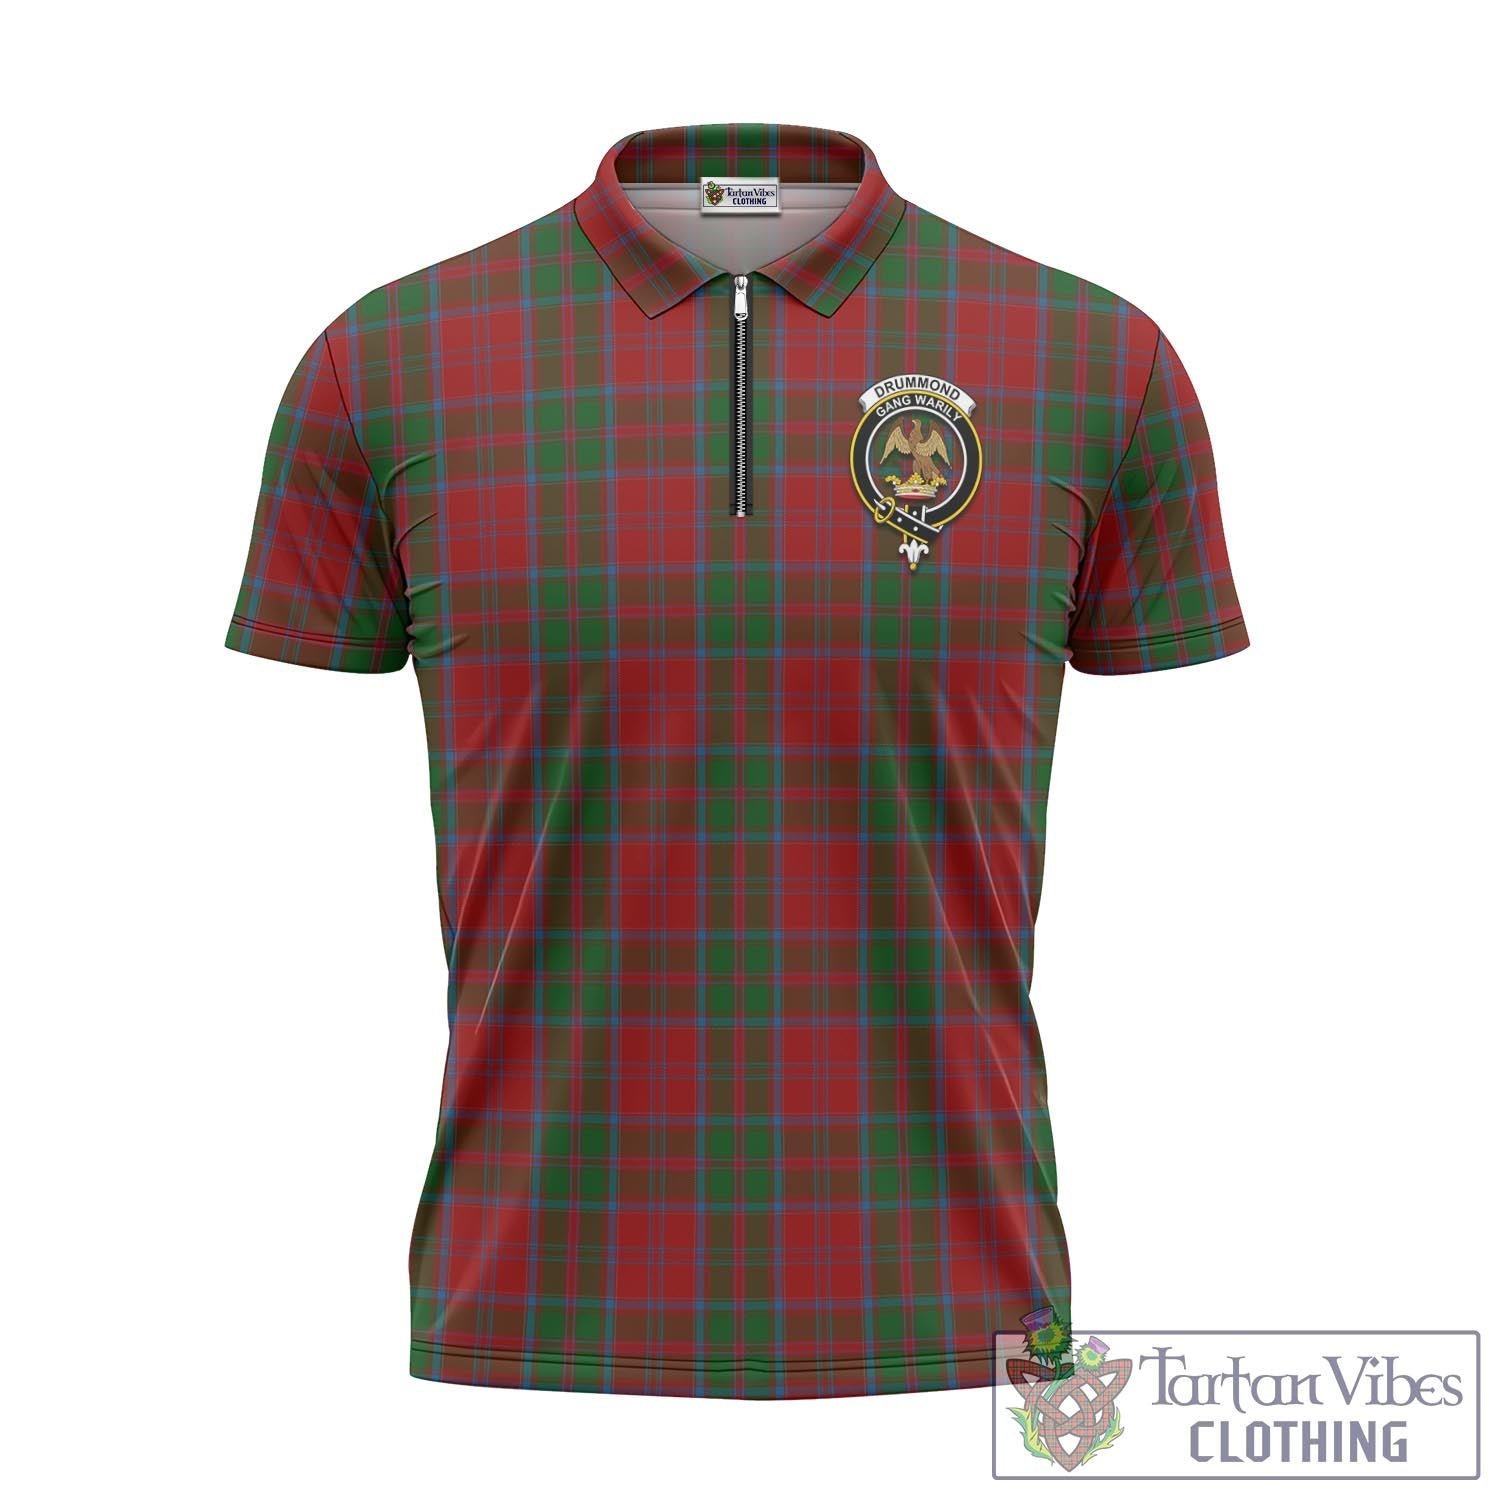 Tartan Vibes Clothing Drummond Tartan Zipper Polo Shirt with Family Crest